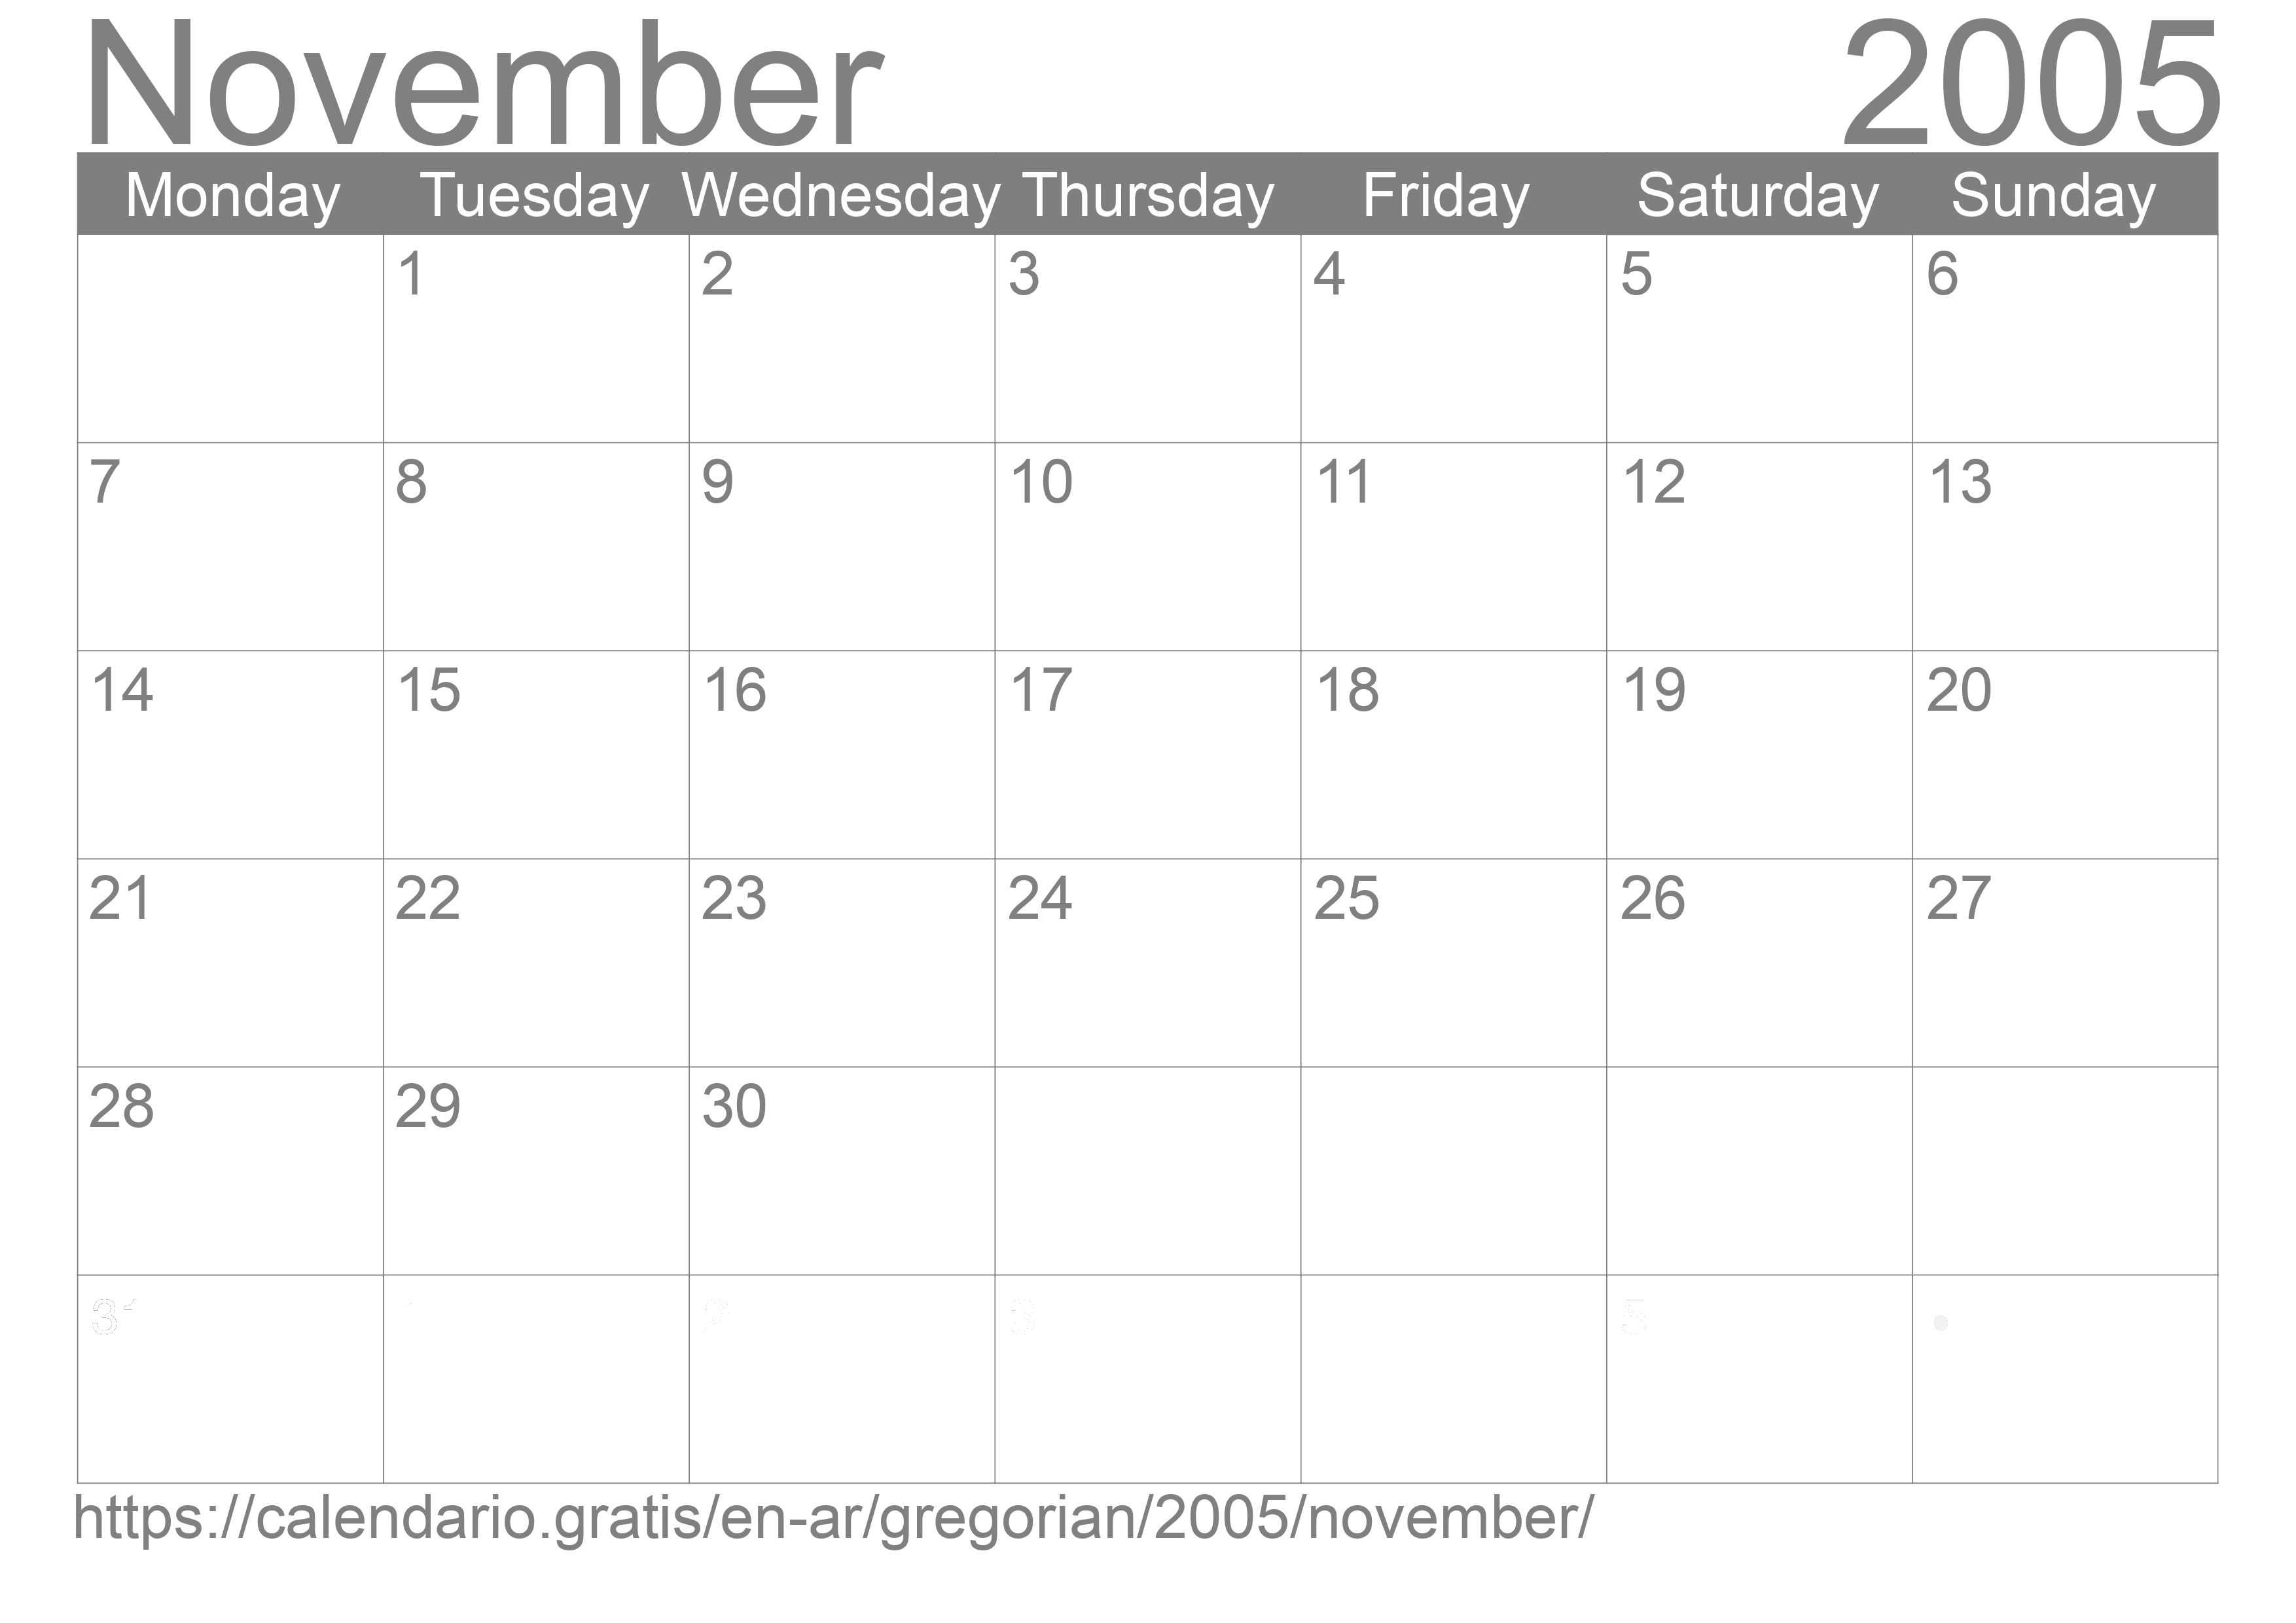 Calendar November 2005 to print